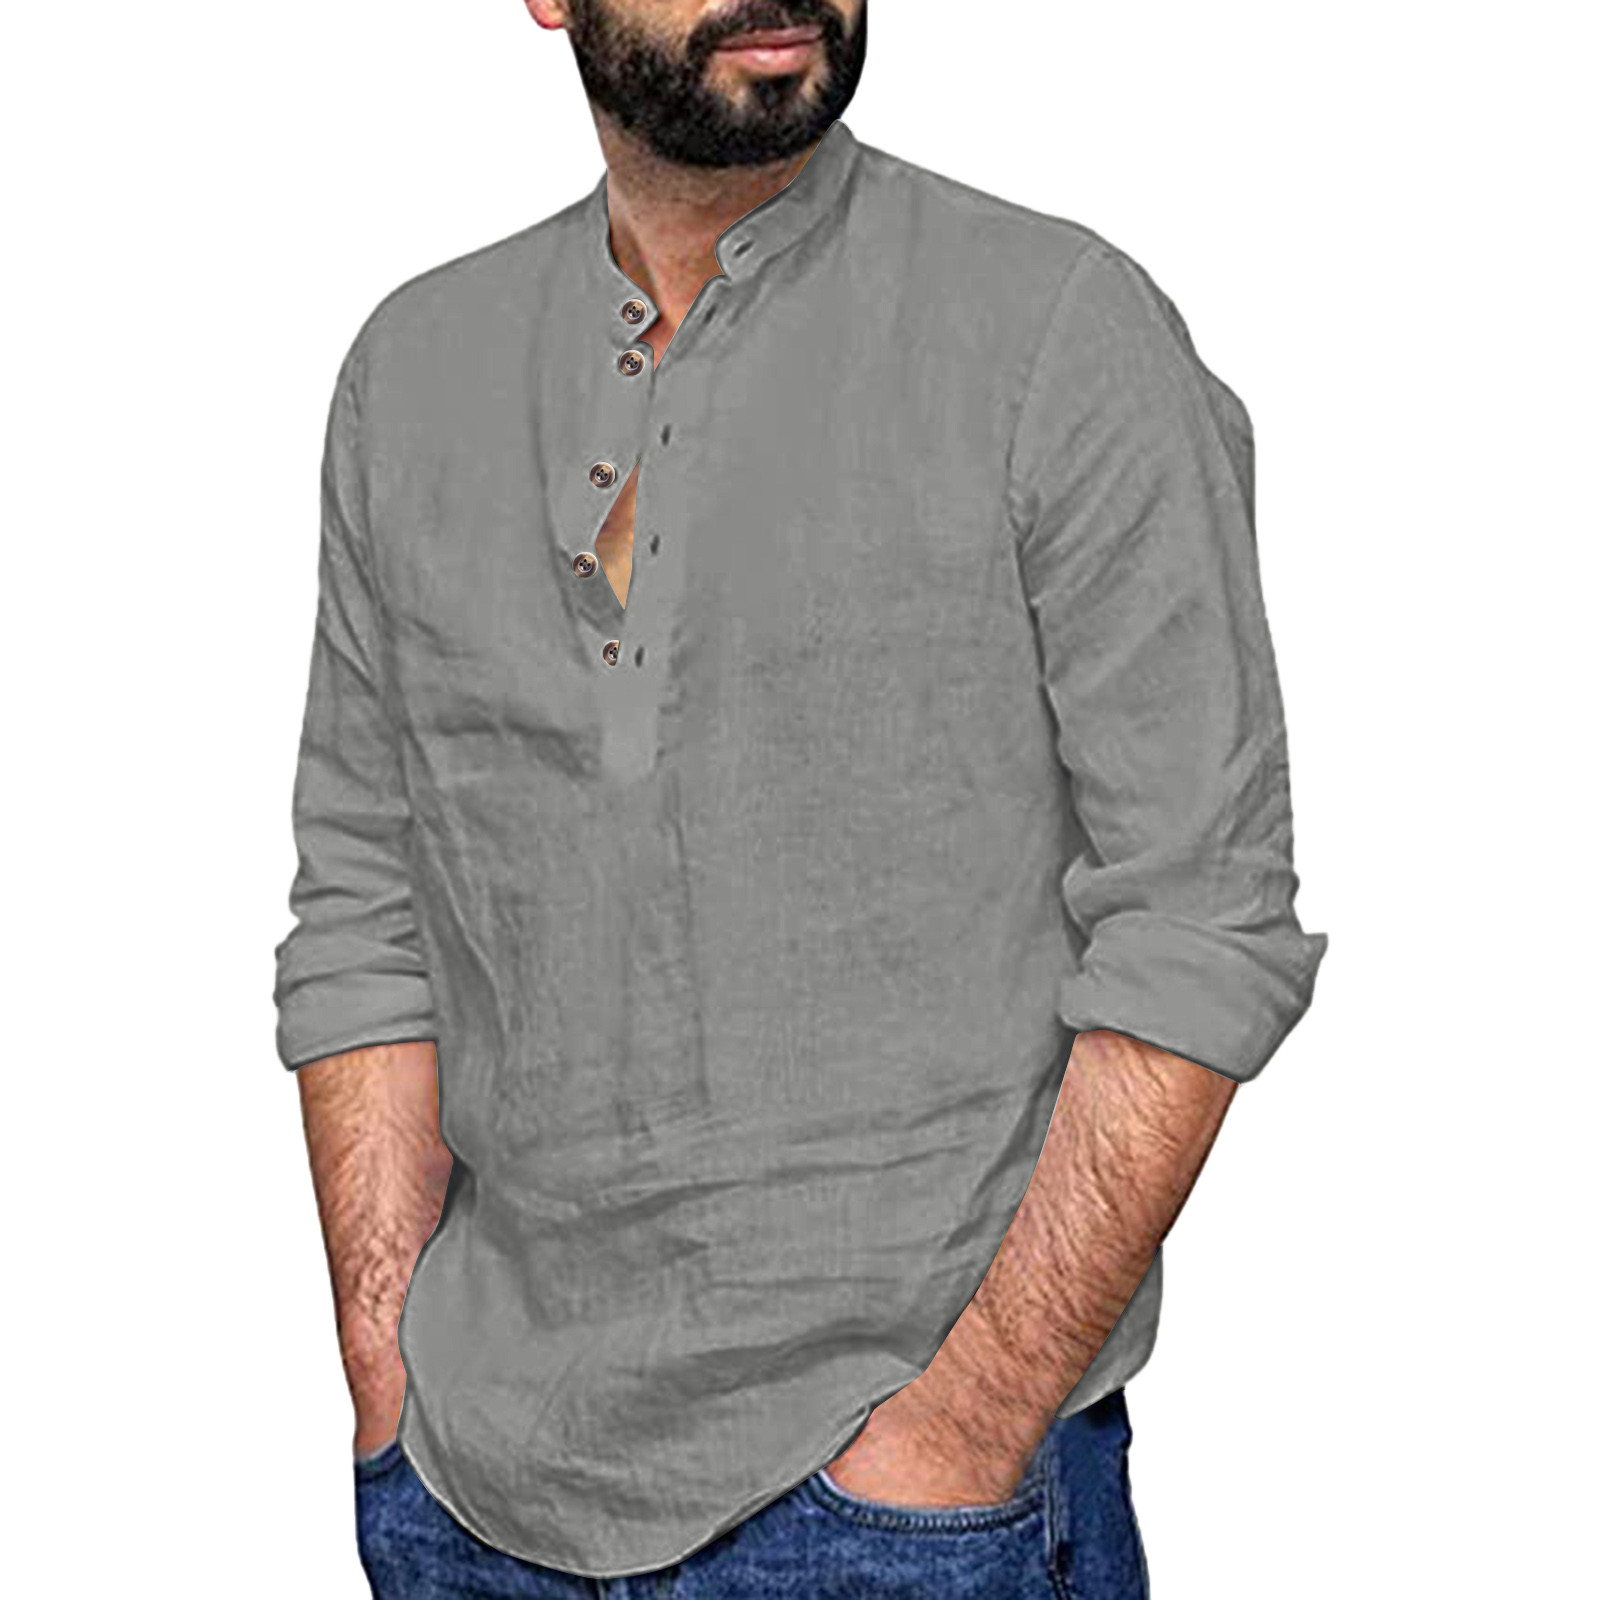 Men-Blouse-Casual-Top-Shirt-Simple-Comfortable-Solid-Color-Button-Collar-Shirt-Top-Loose-Elegant-Top-5.jpg